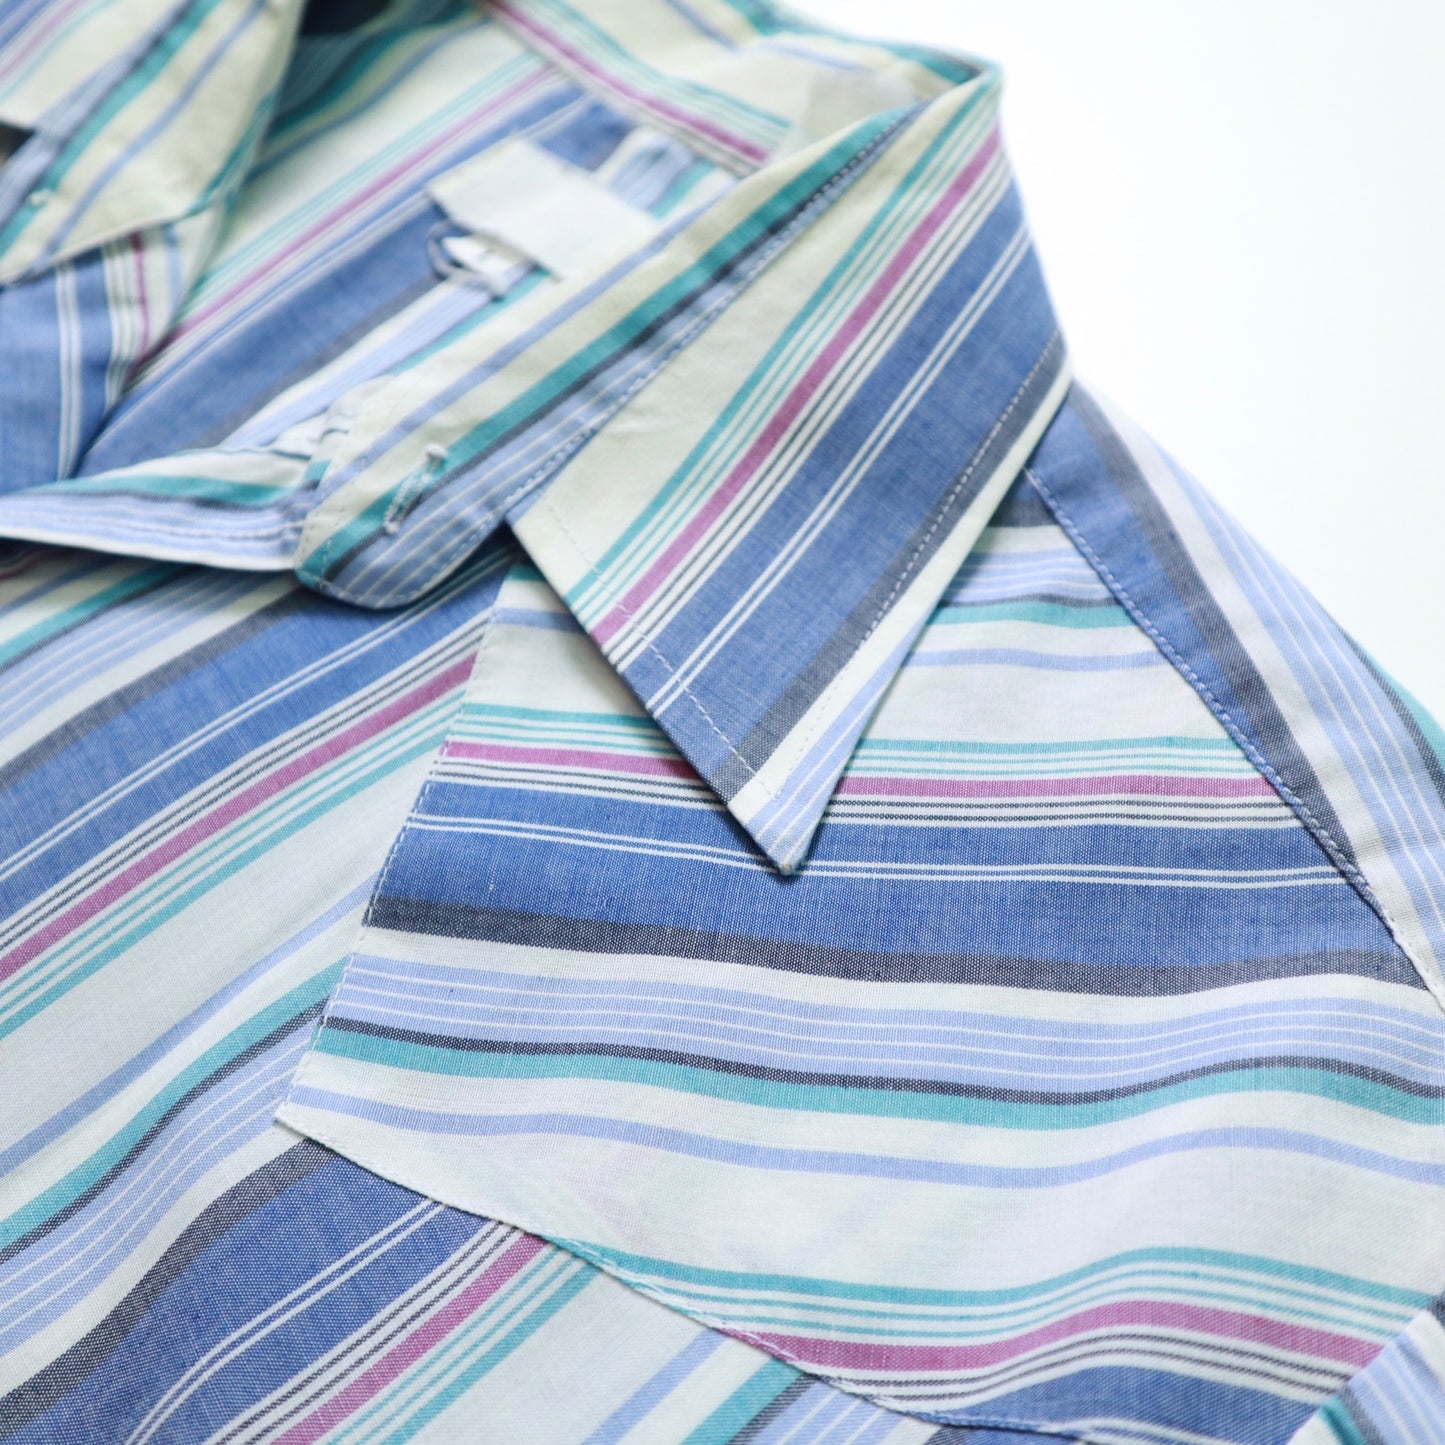 Blue Striped Double Pocket Western Shirt